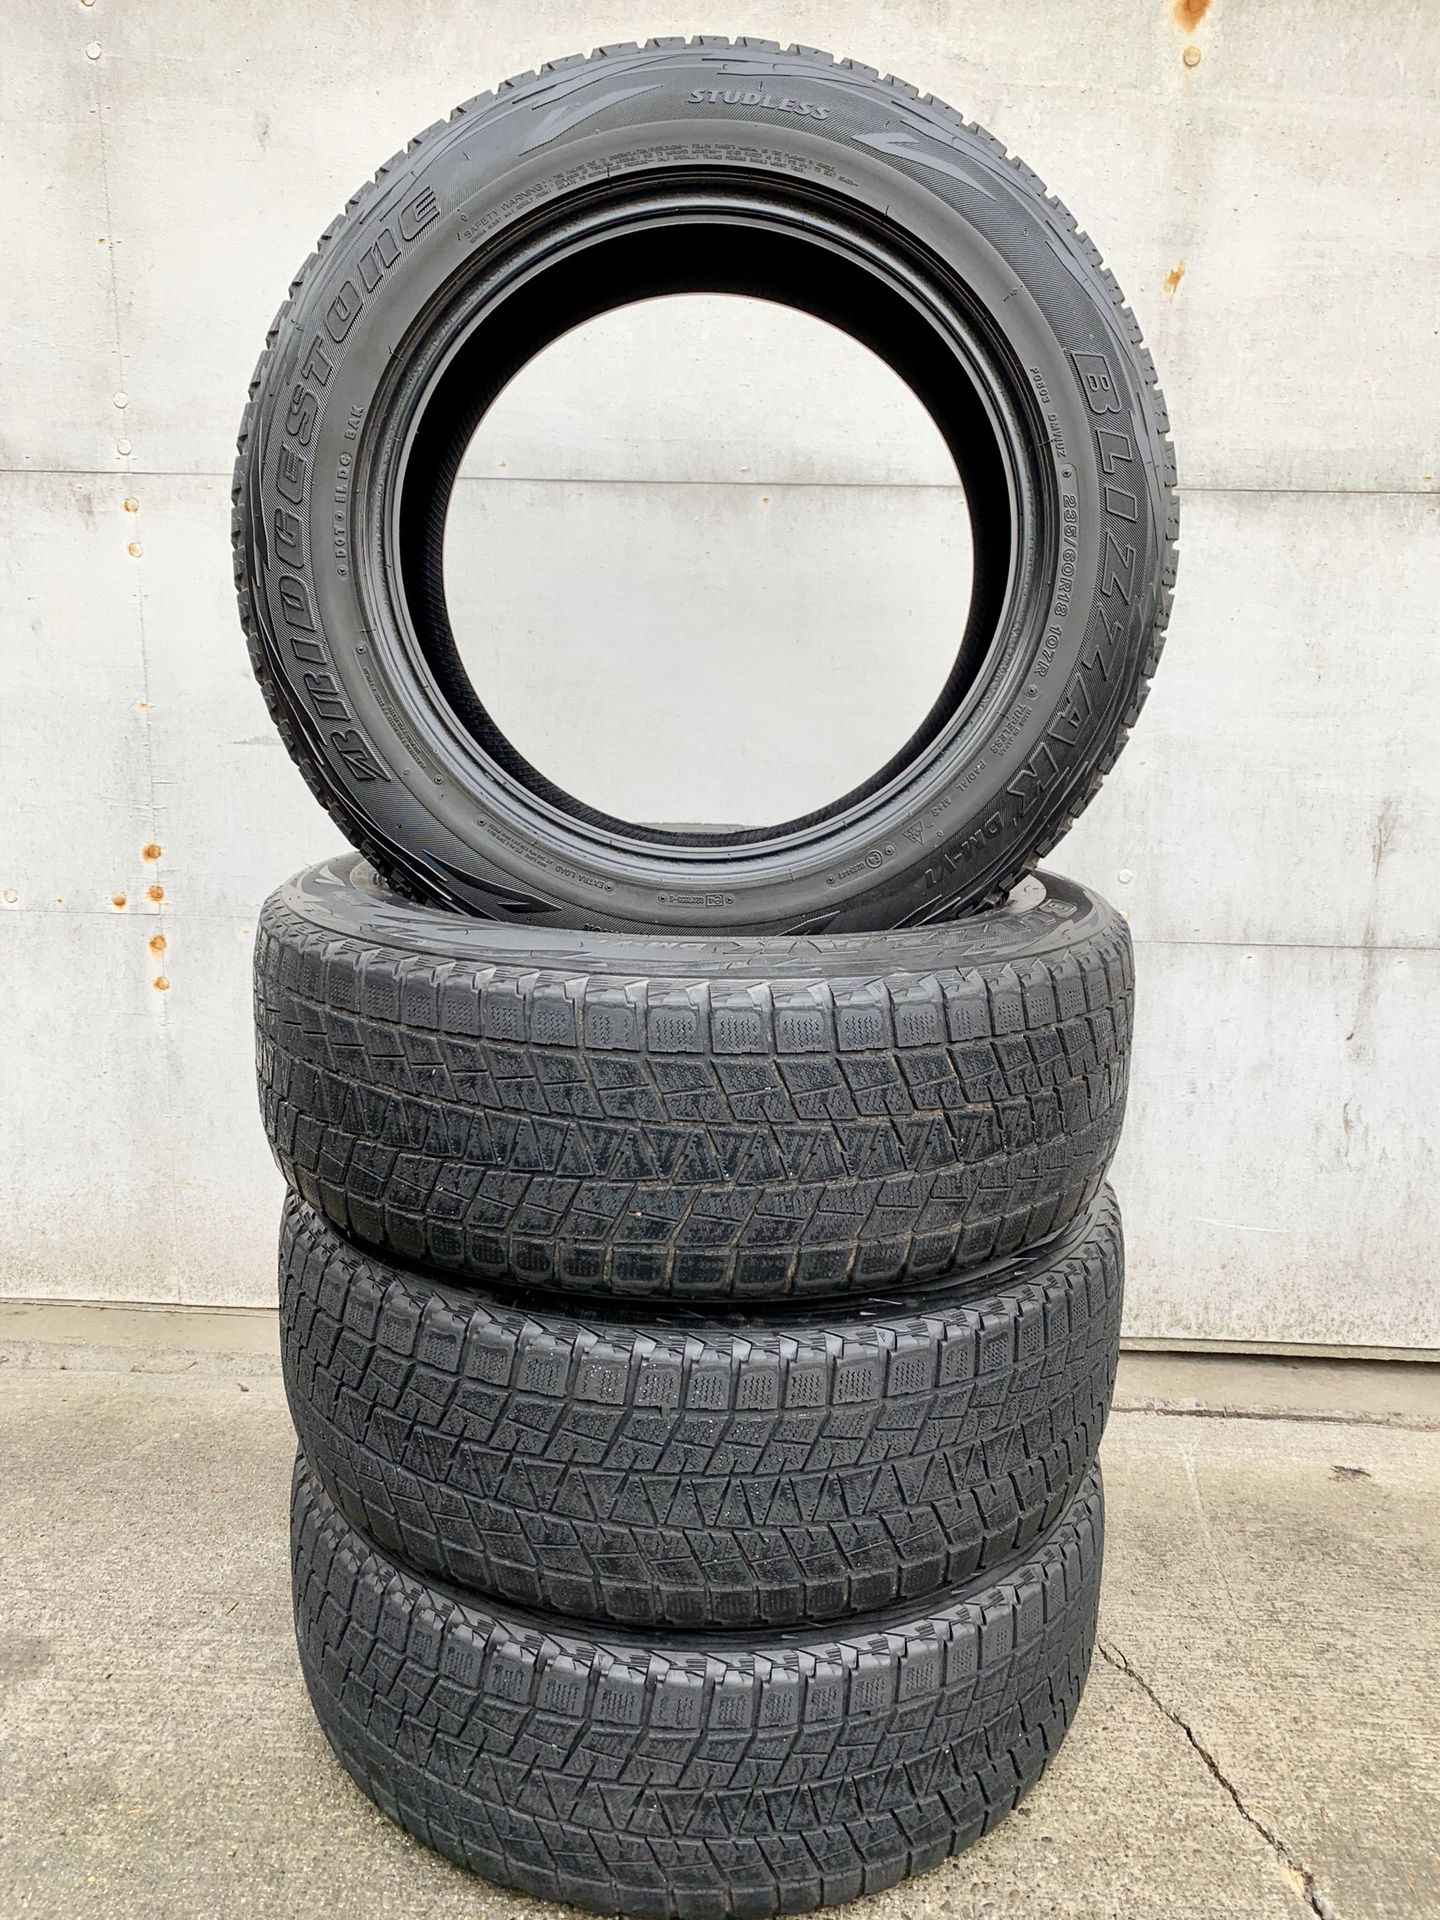 235 60r18 Bridgestone Blizzak Snow Tires -Set of all 4